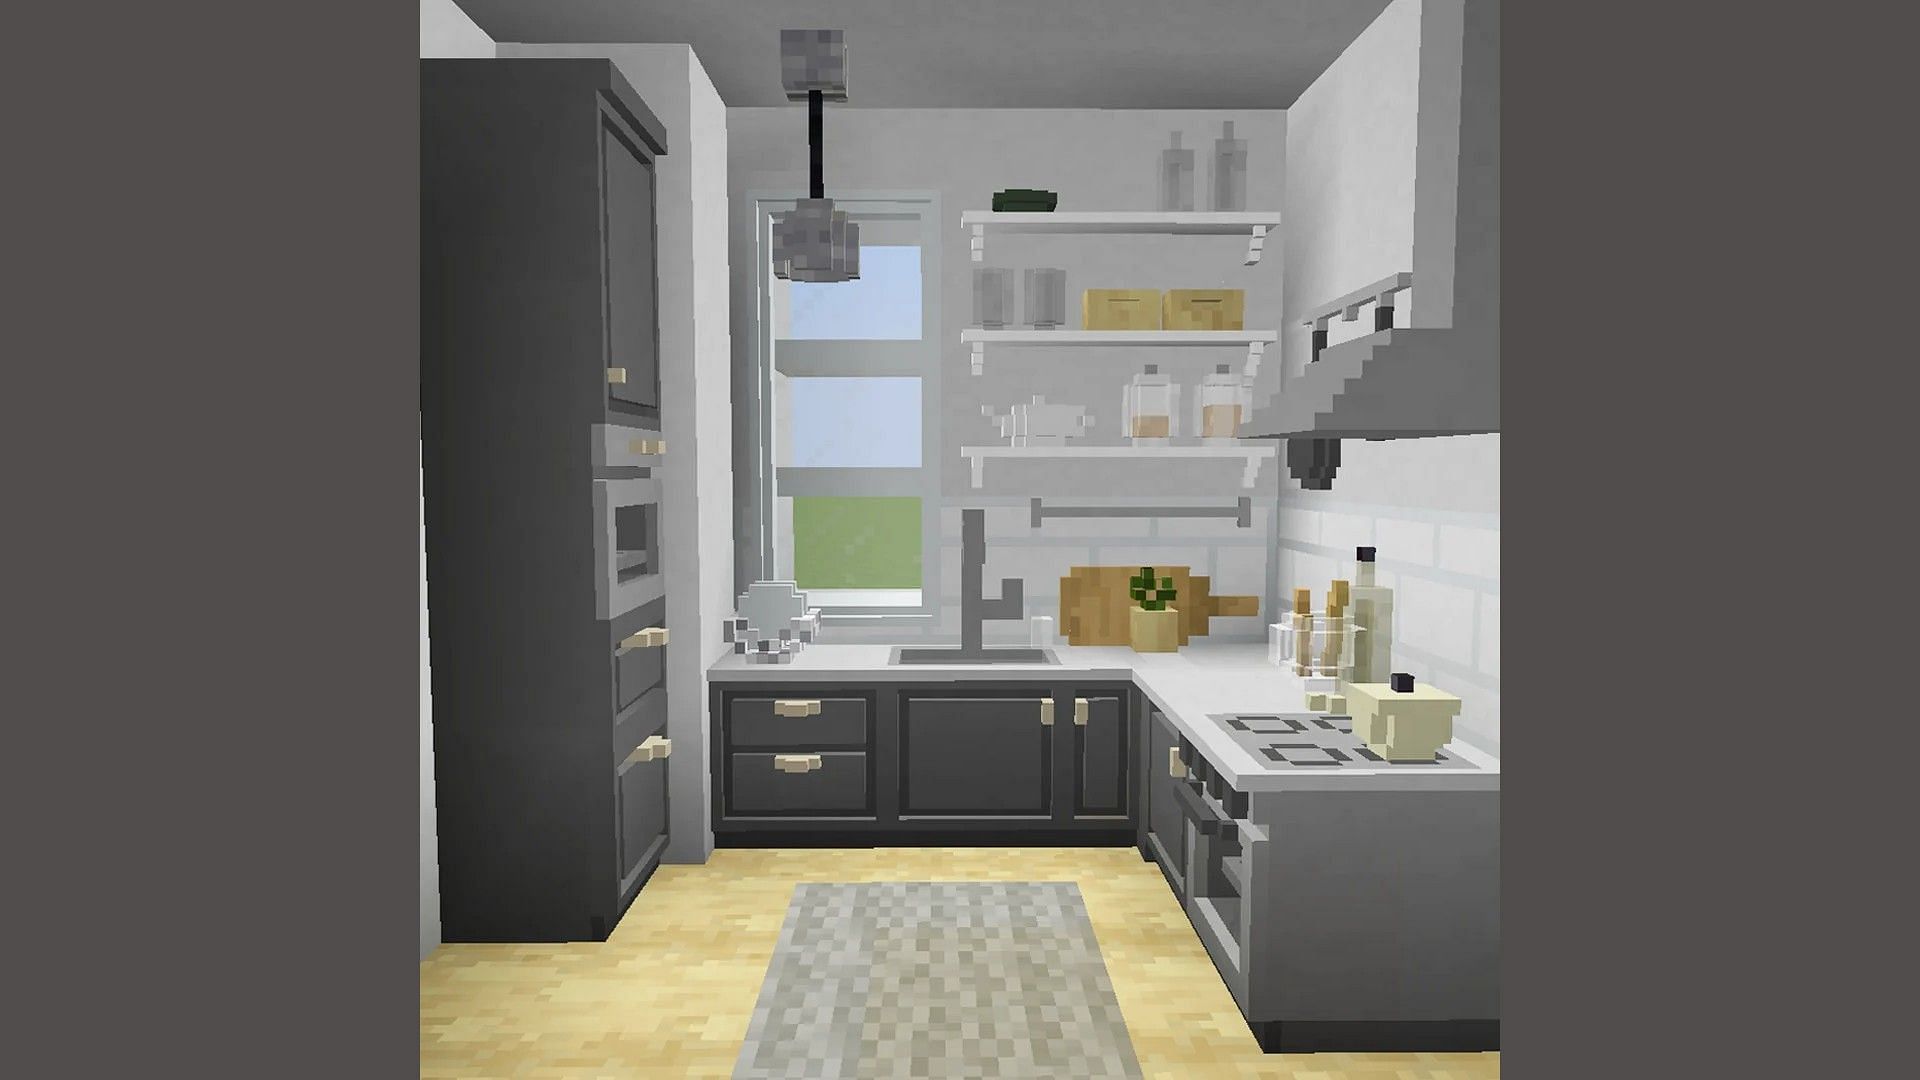 Ikea kitchen design (Image via u/nioraca)